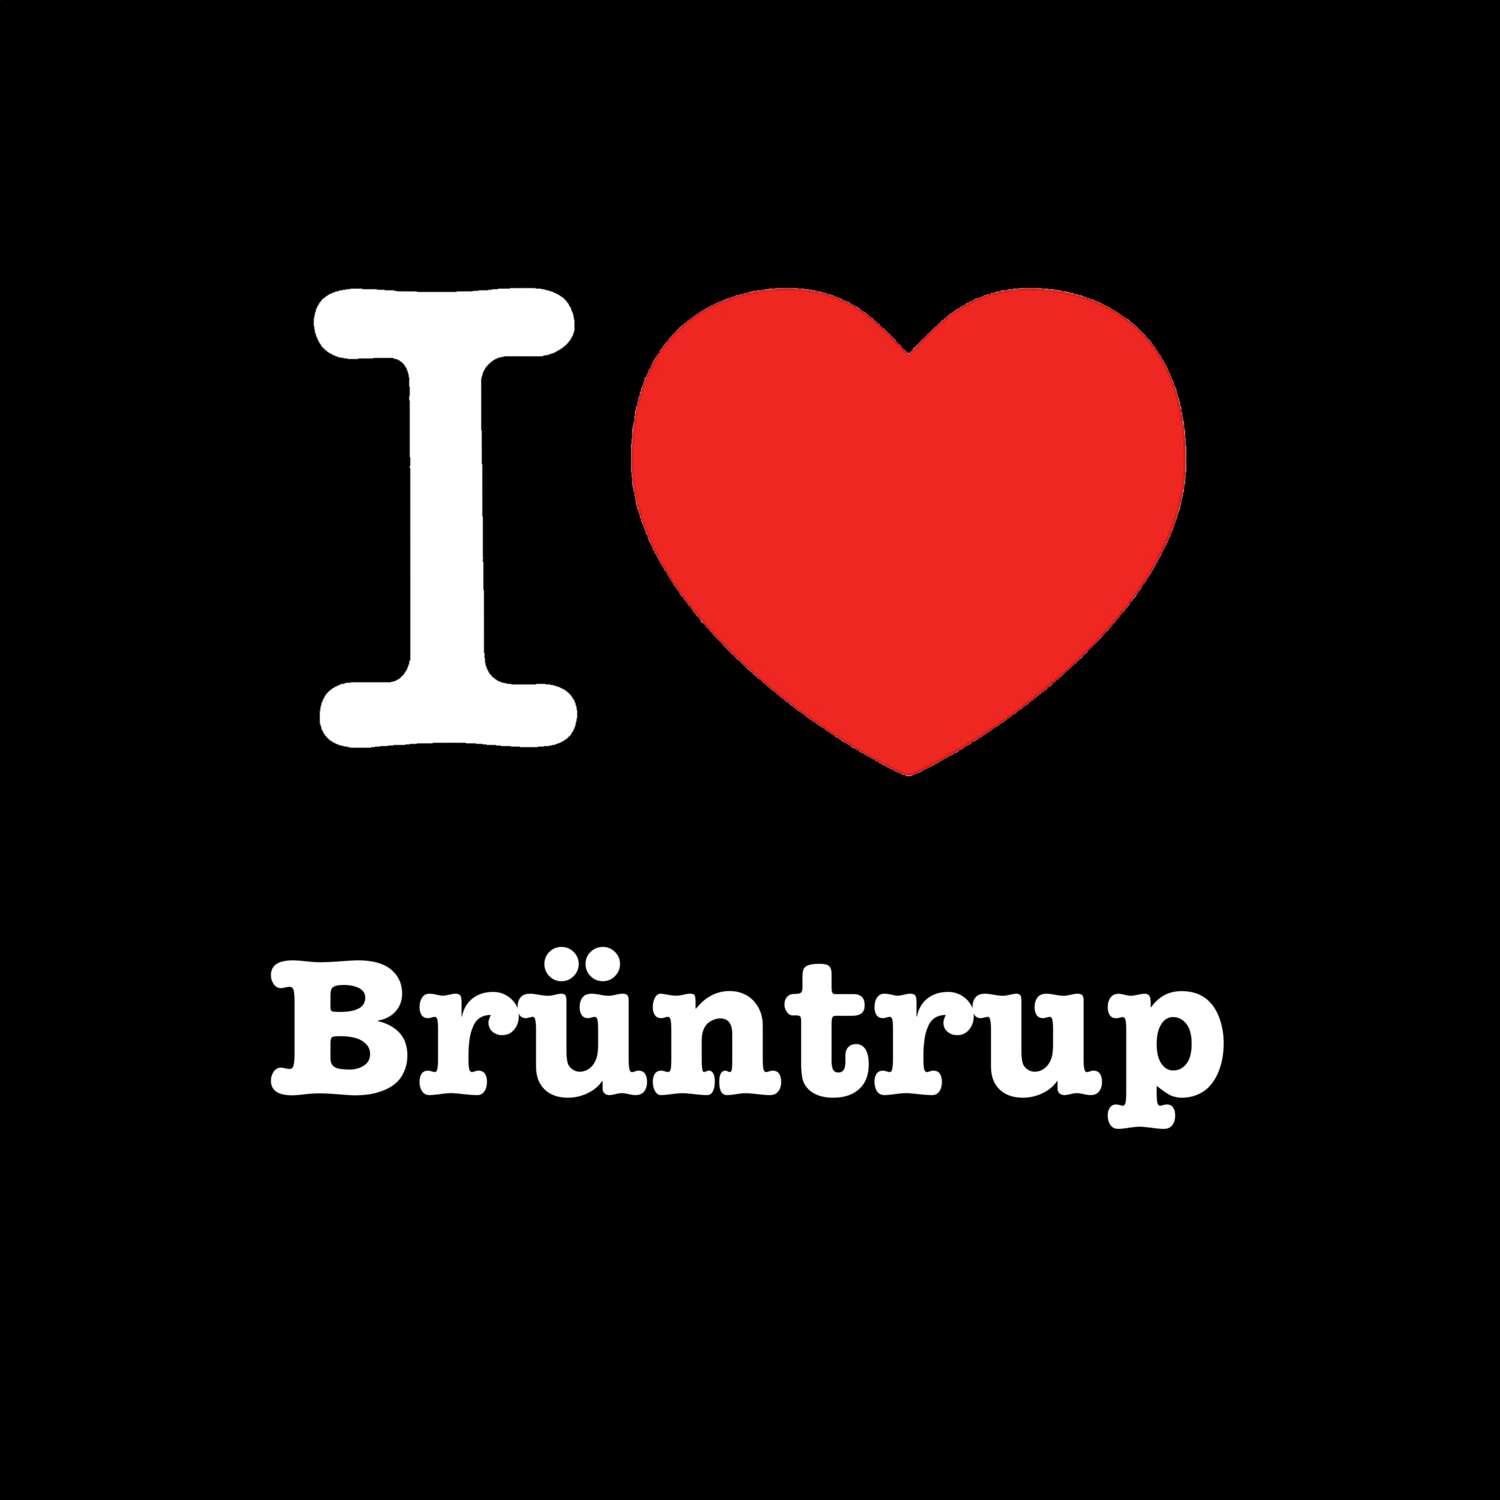 Brüntrup T-Shirt »I love«